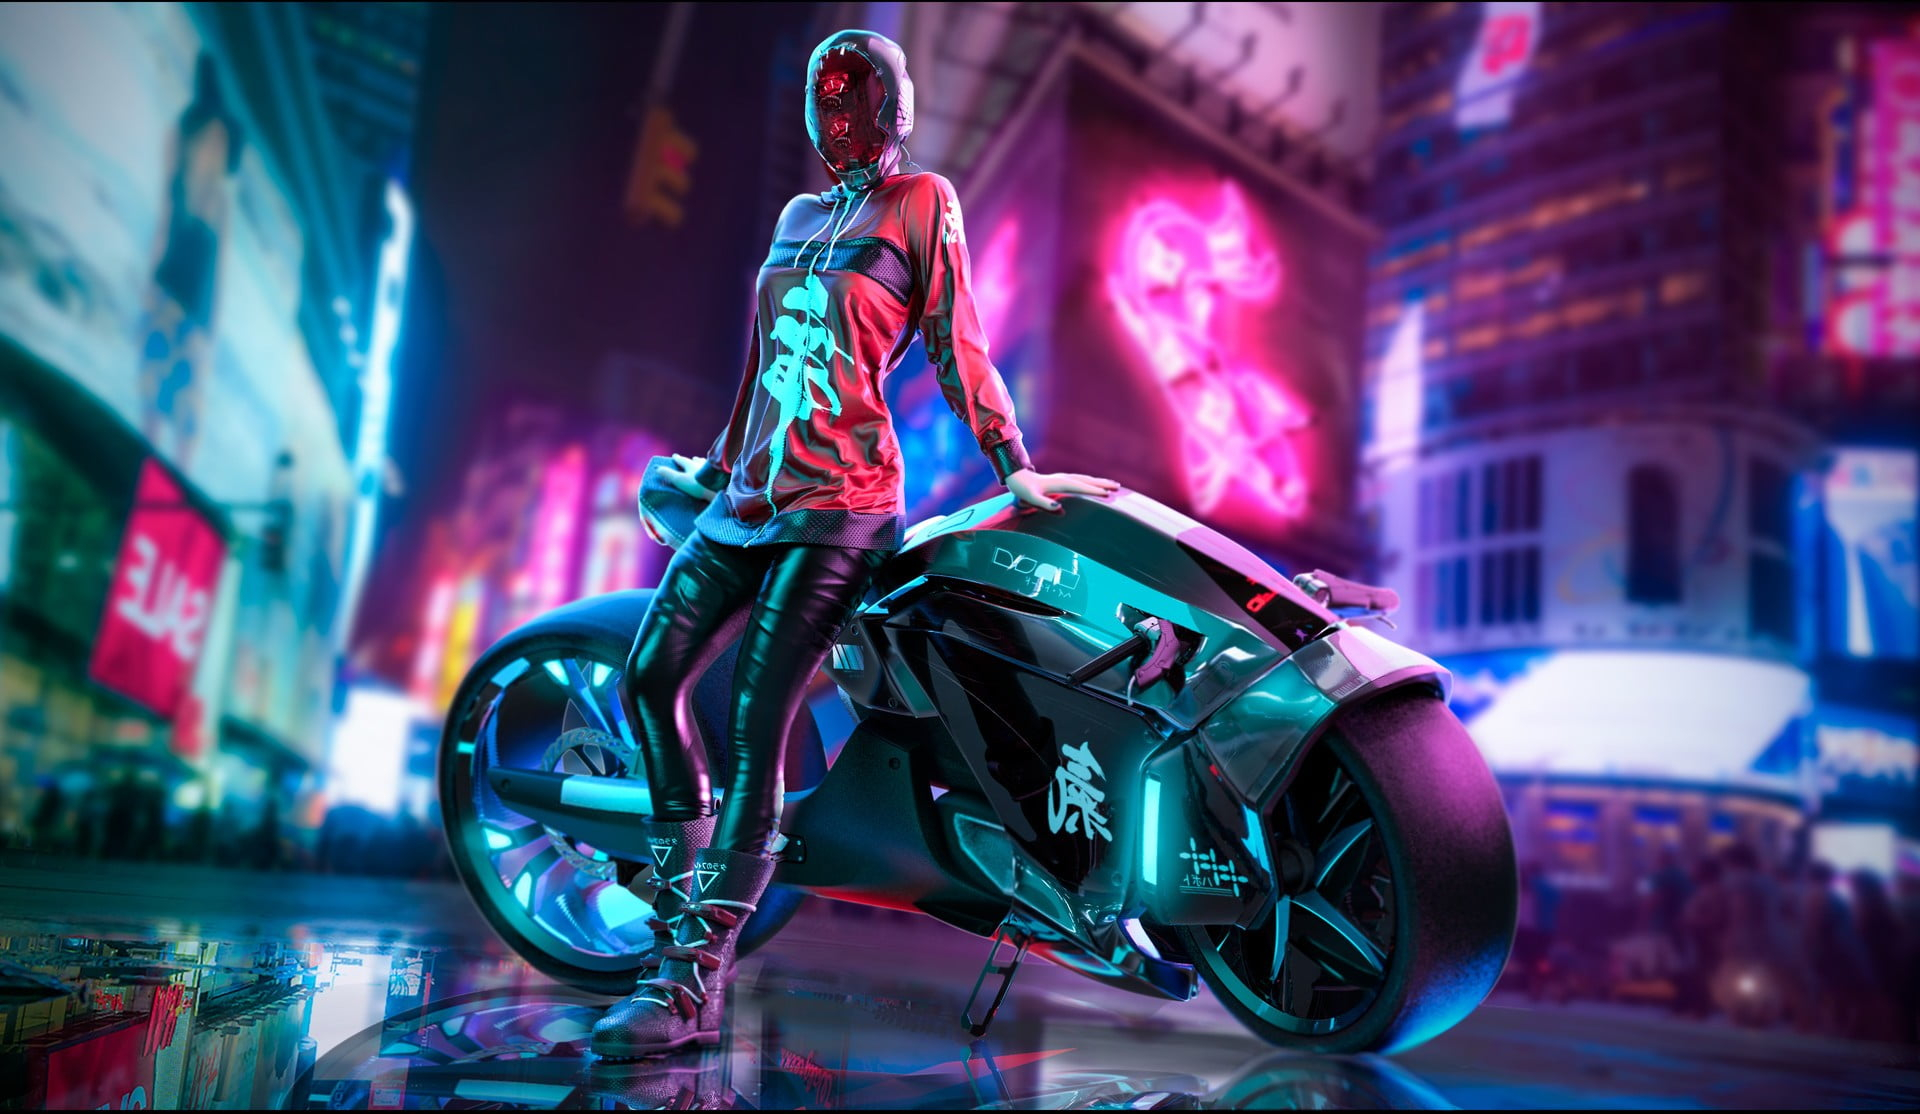 Aesthetic sports bike, female character artwork, motorcycle wallpaper